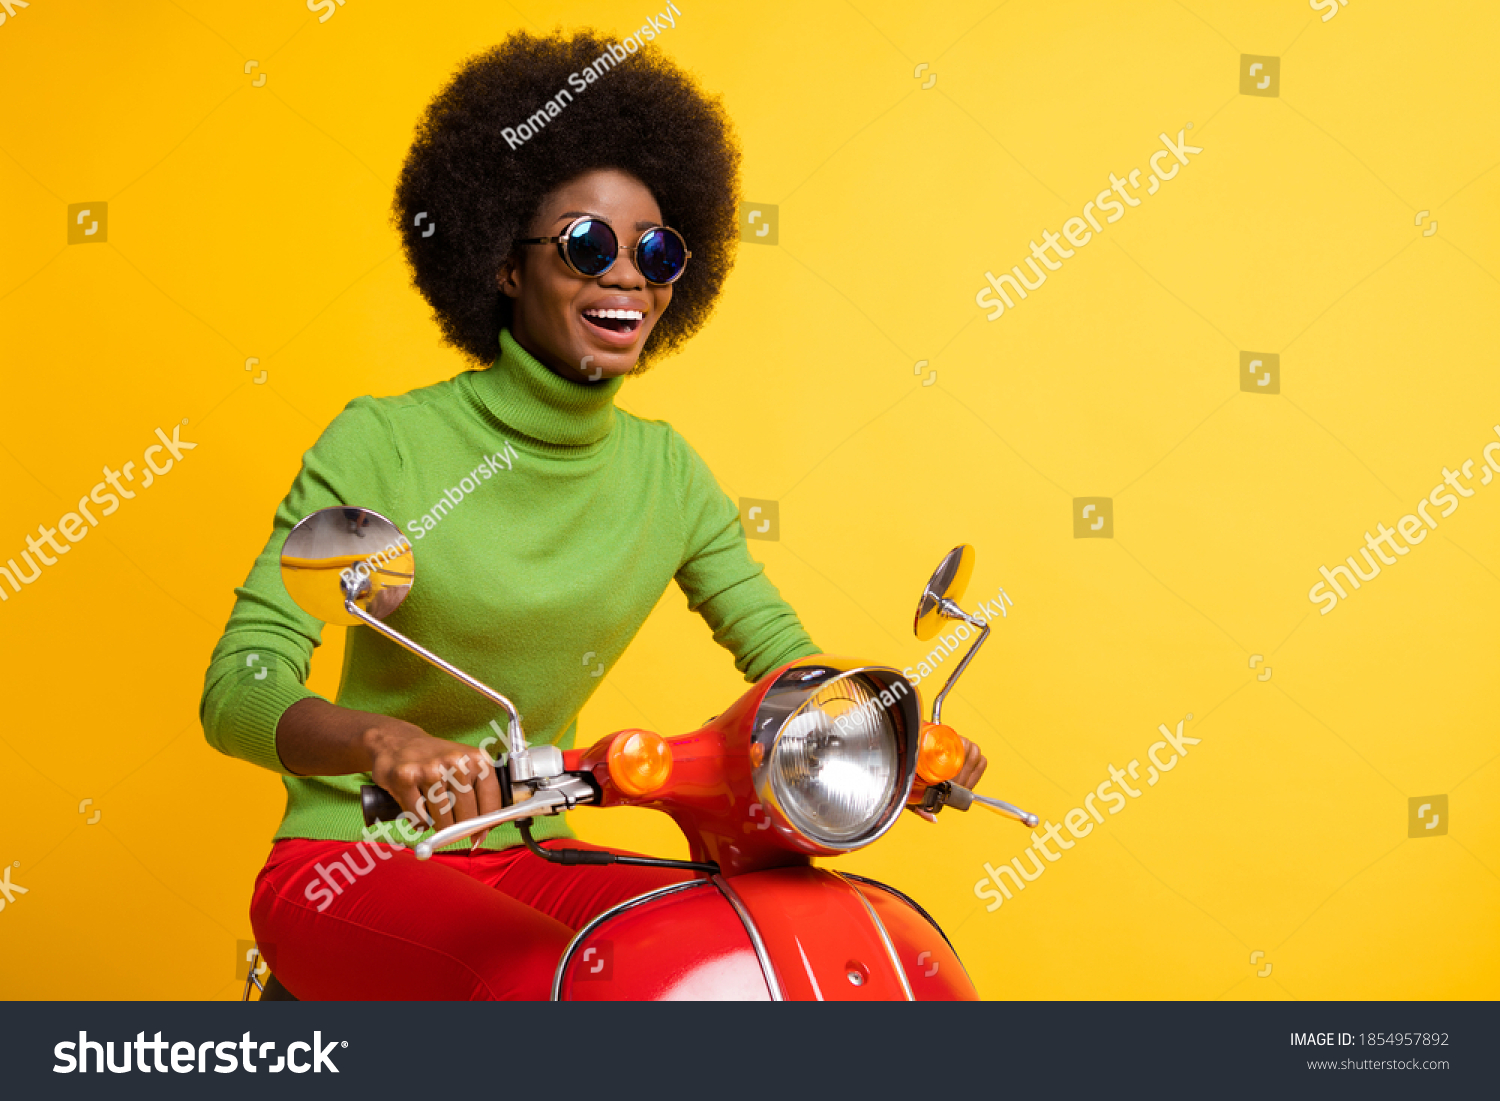 5,338 African woman on bike Images, Stock Photos & Vectors | Shutterstock